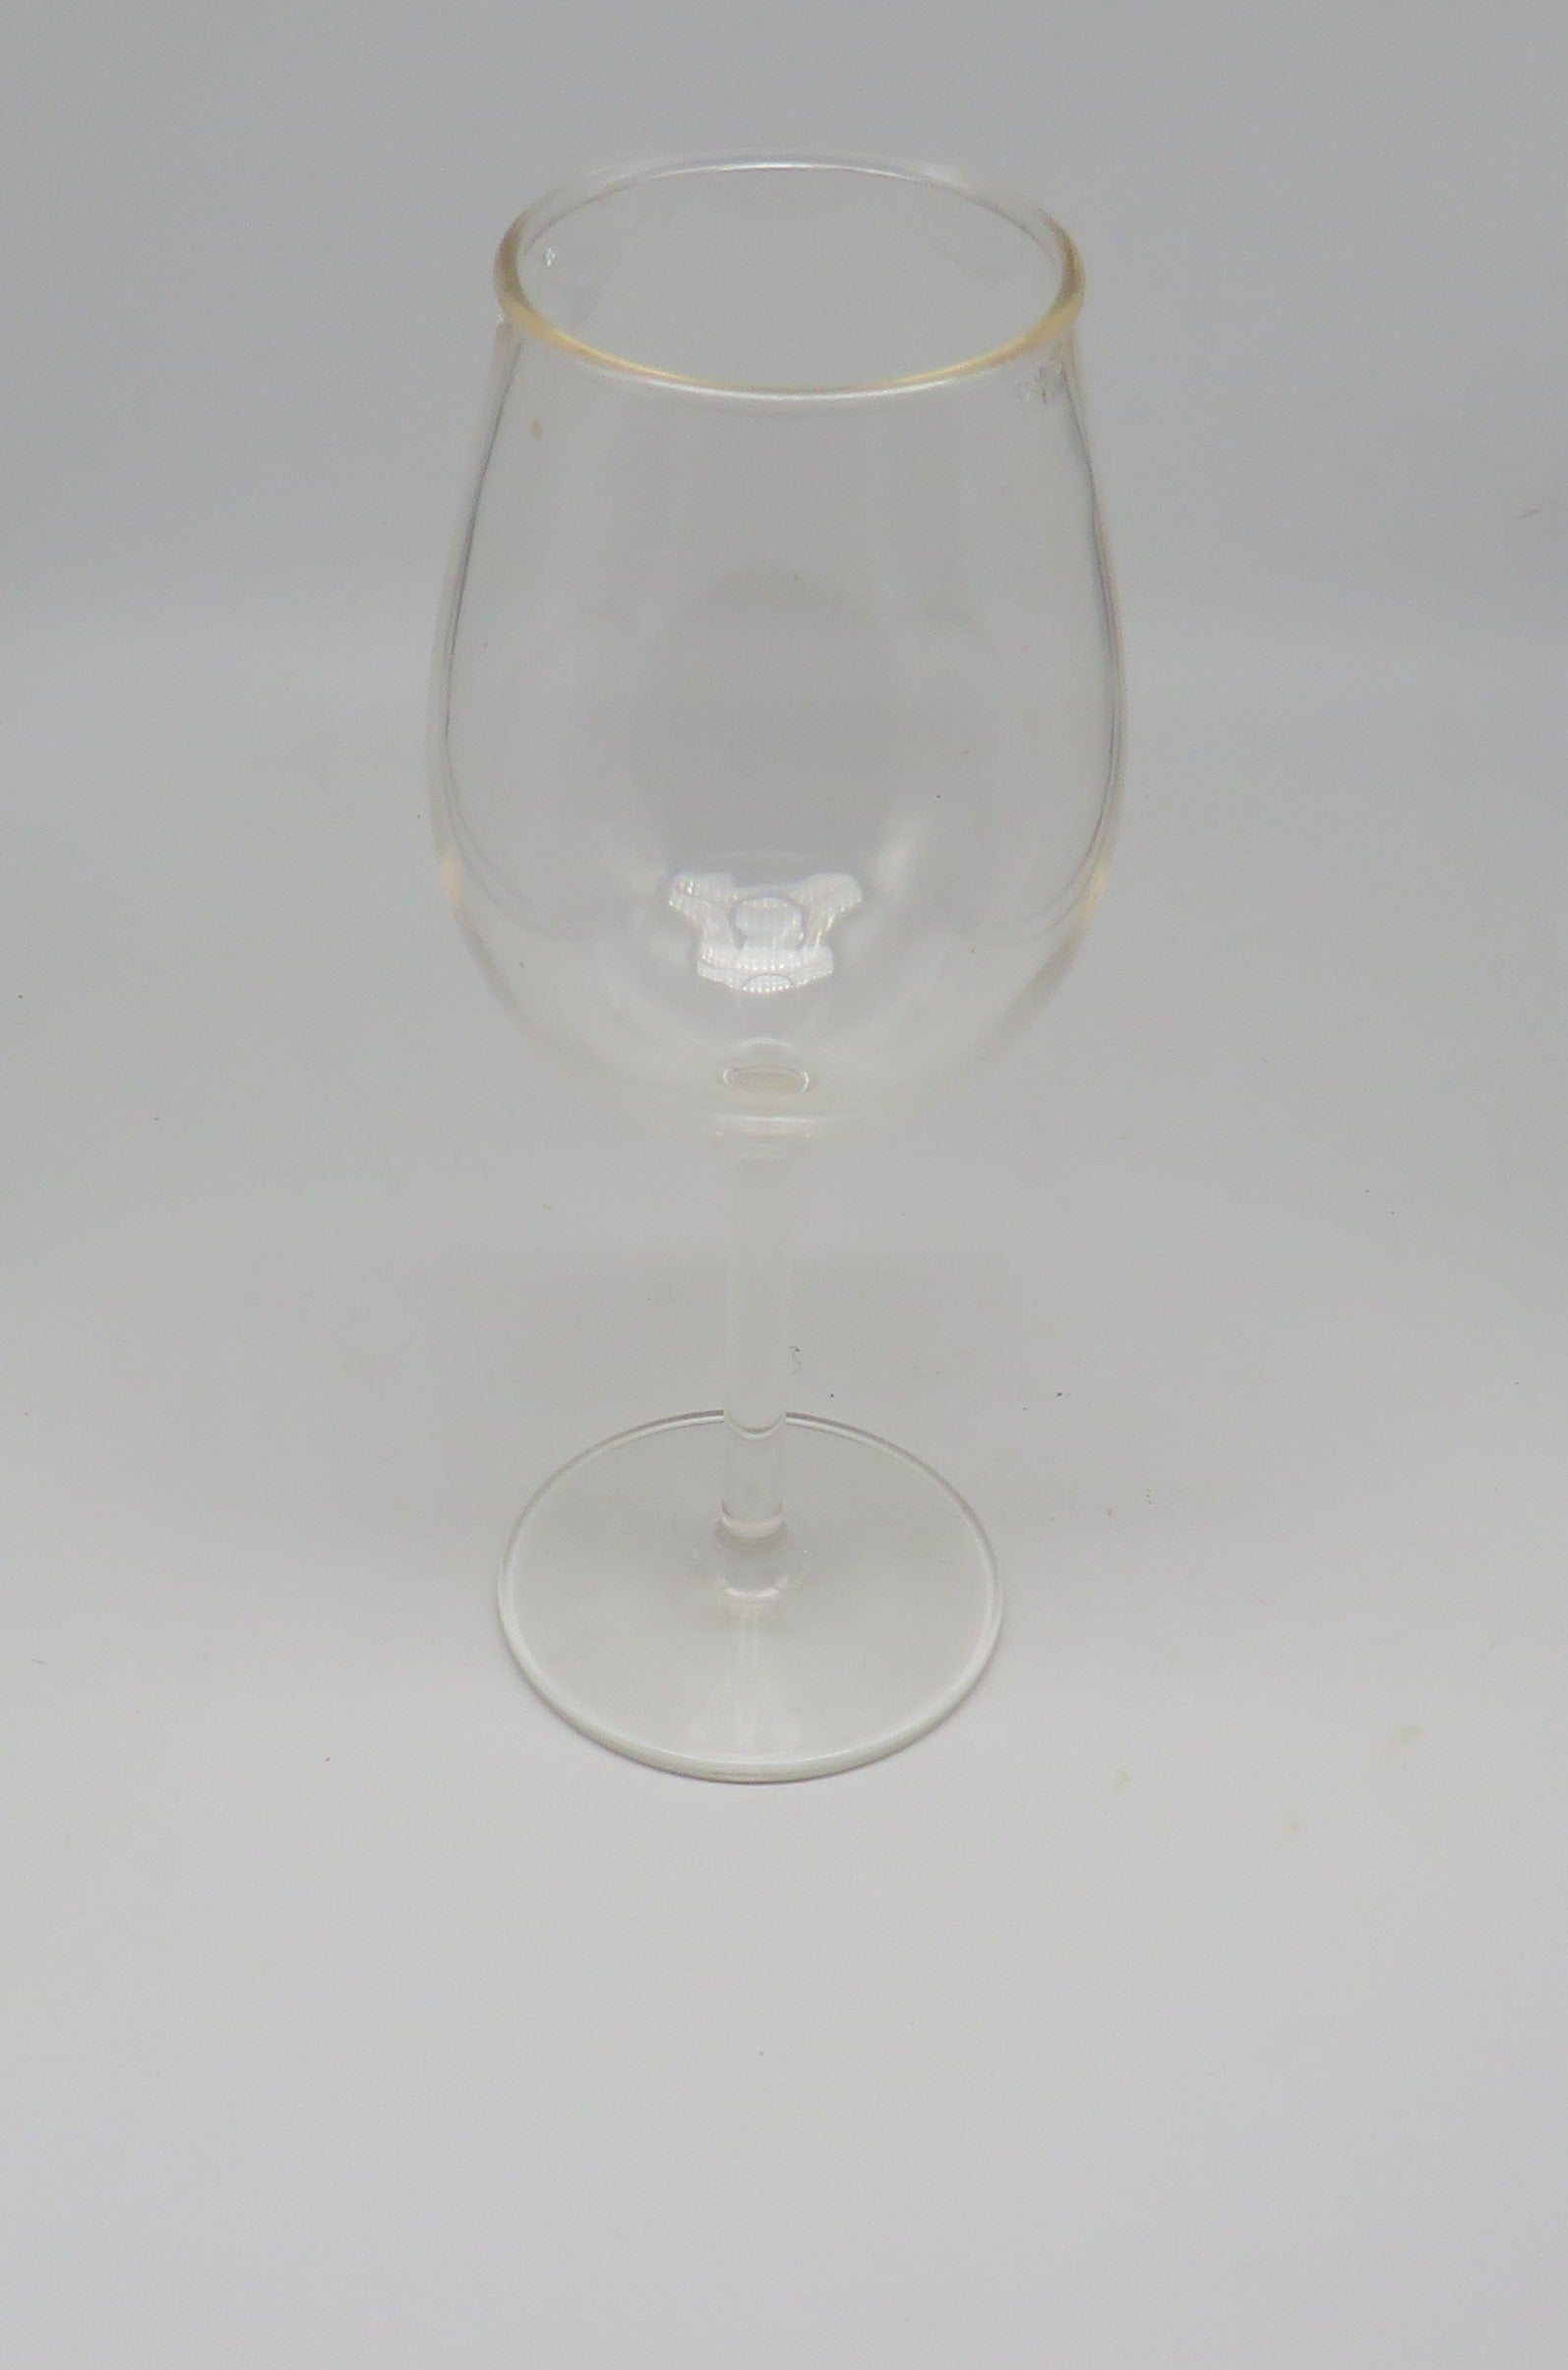 Yoebi Plastic Wine Glass Stemware 14oz (For the Boat)